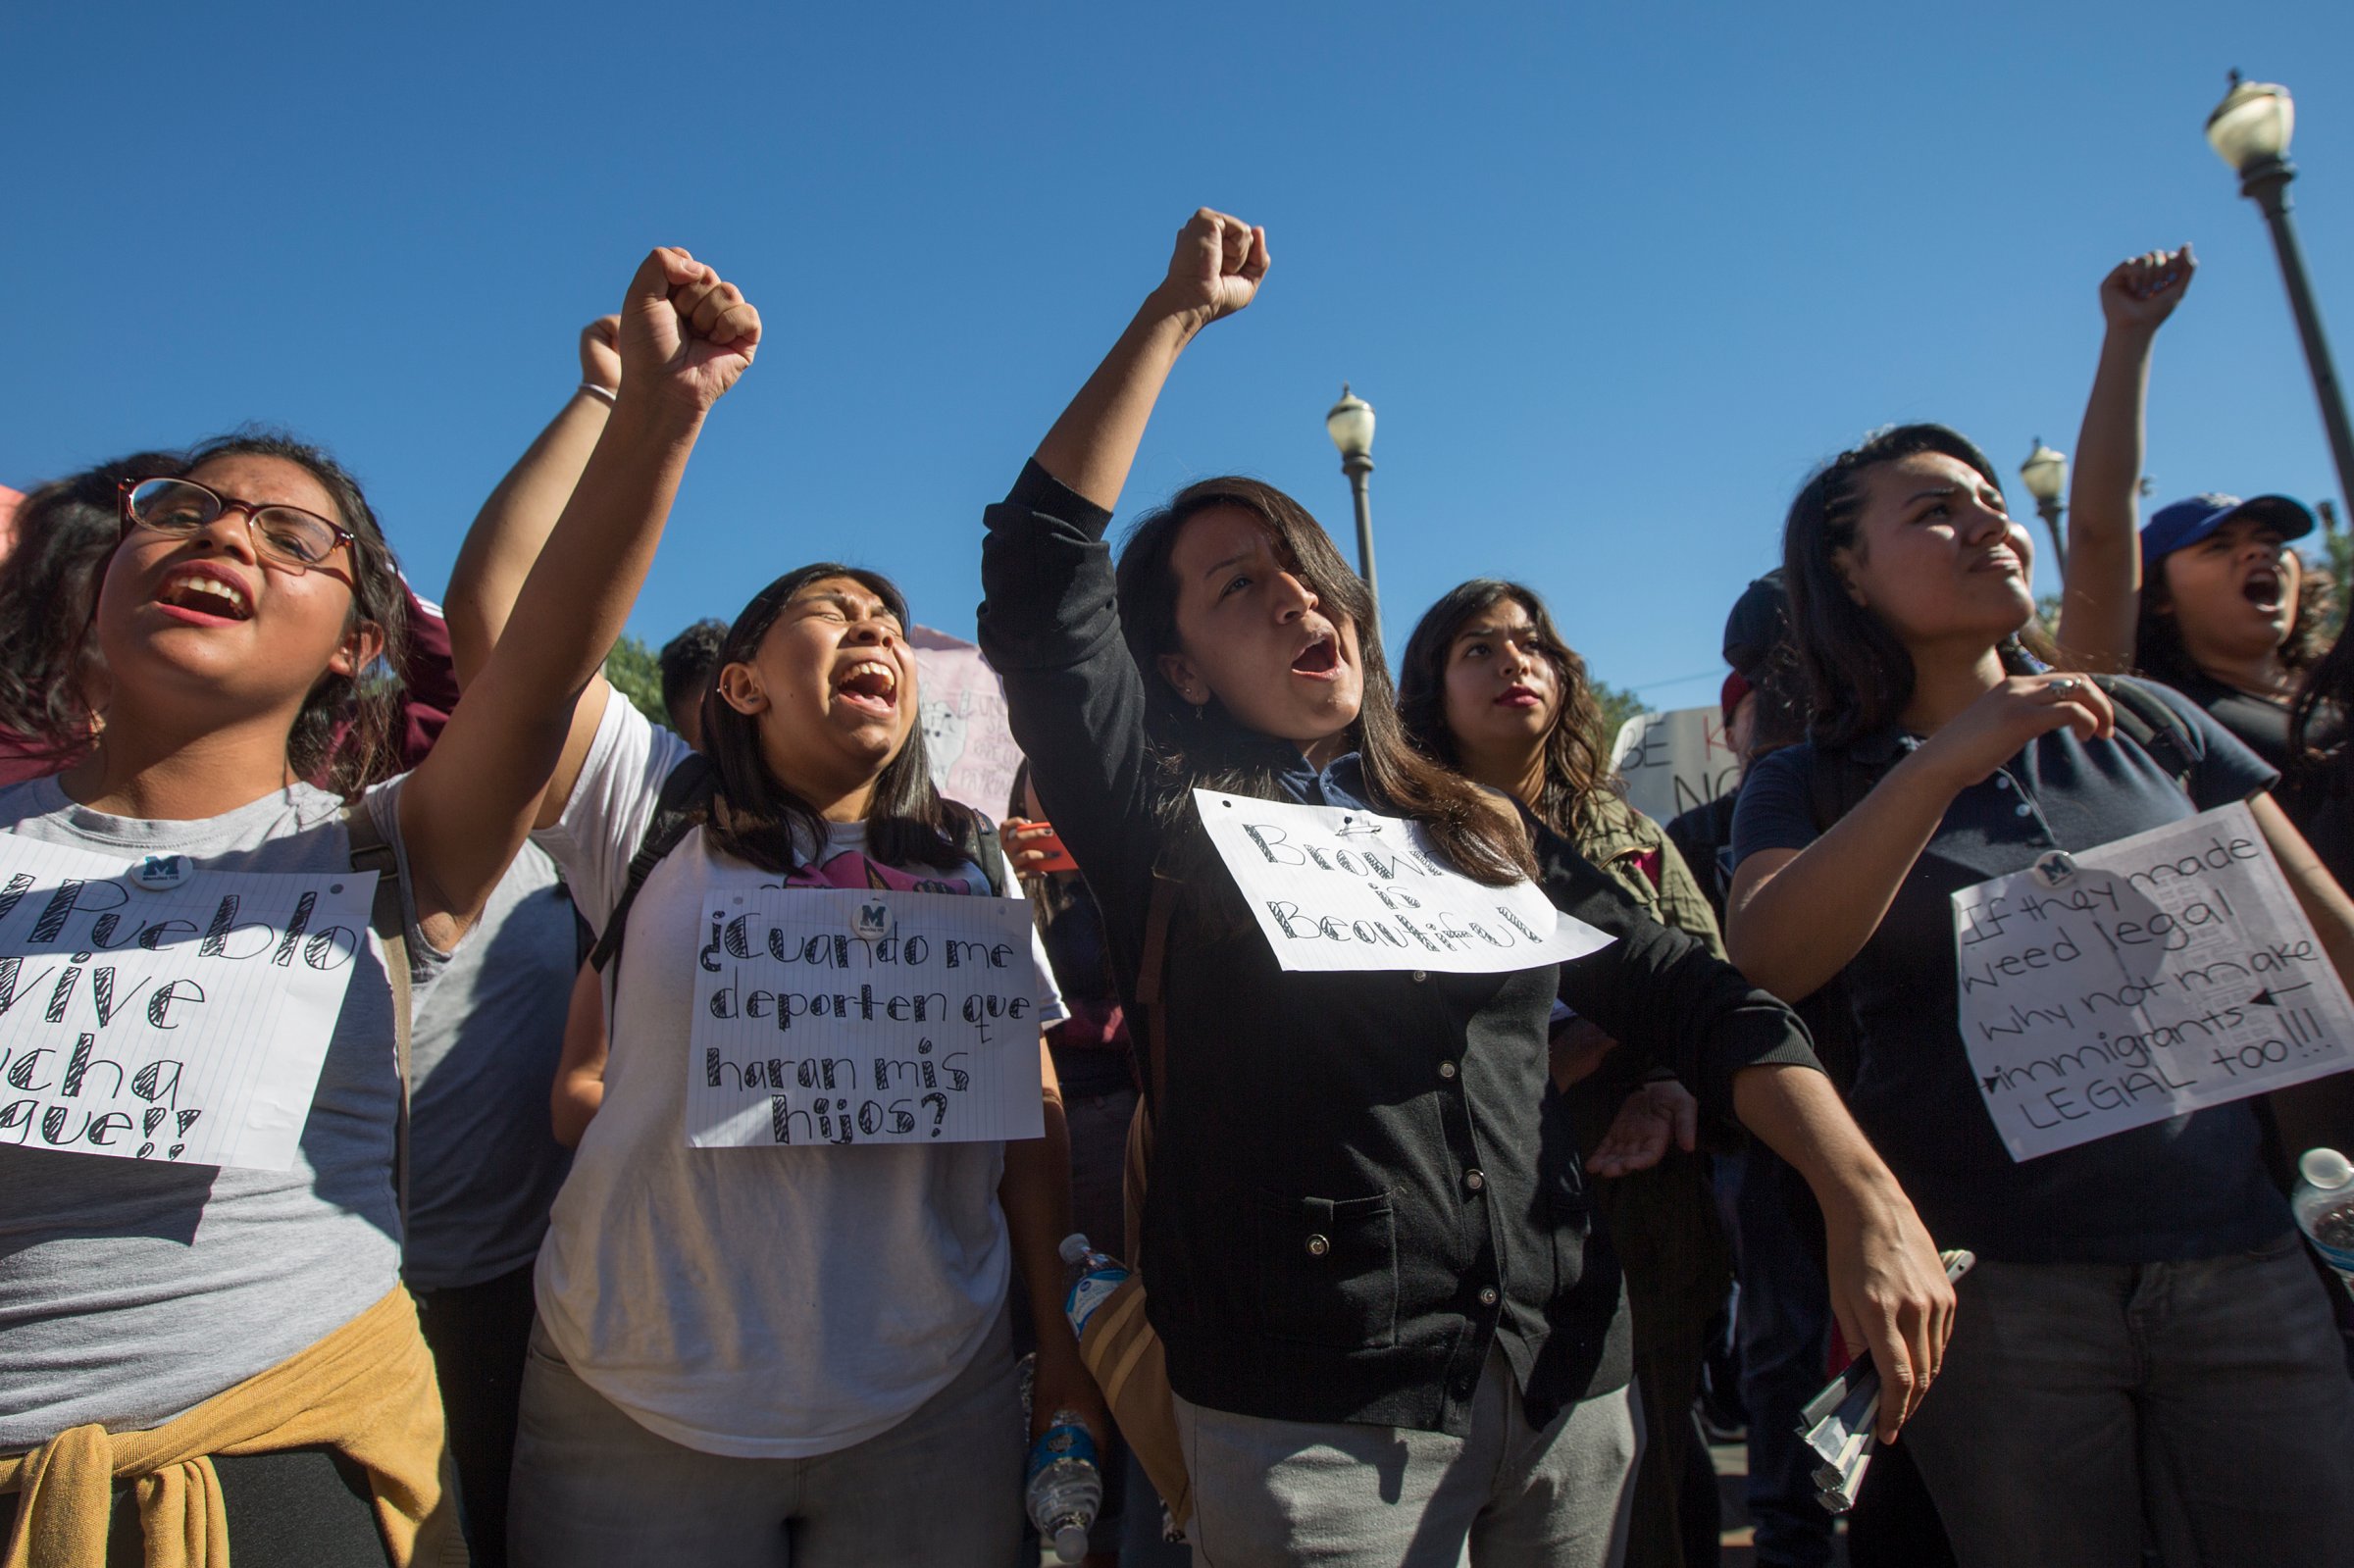 Los Angeles Area Students Organize Large Anti-Trump Protest